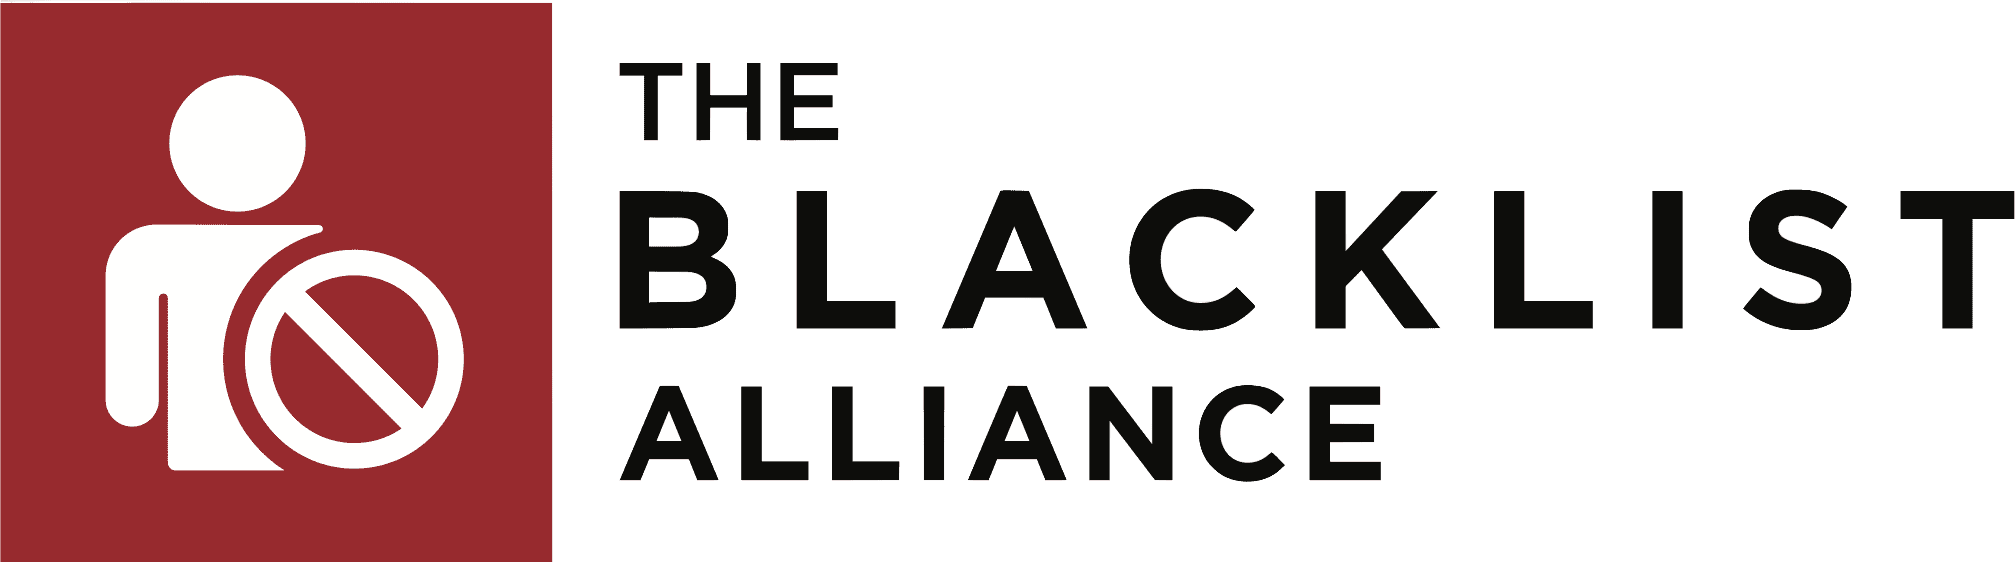 blacklist-alliance-logo.png